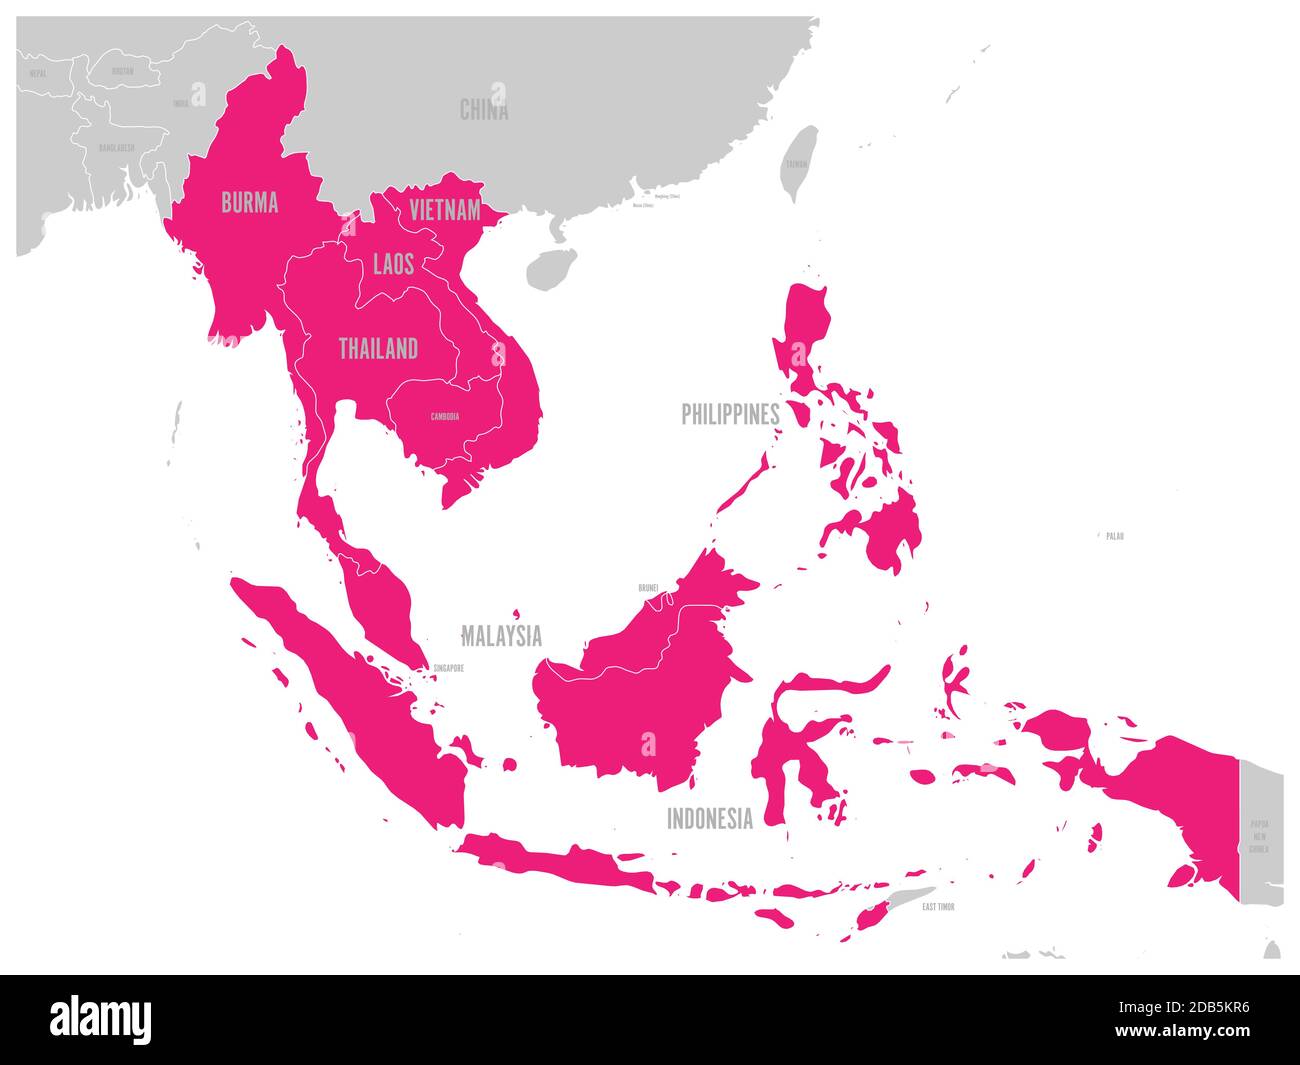 ASEAN Economic Community, AEC, MAP. Graue Karte mit rosa hervorgehobenen Mitgliedsländern, Südostasien. Vektorgrafik. Stock Vektor